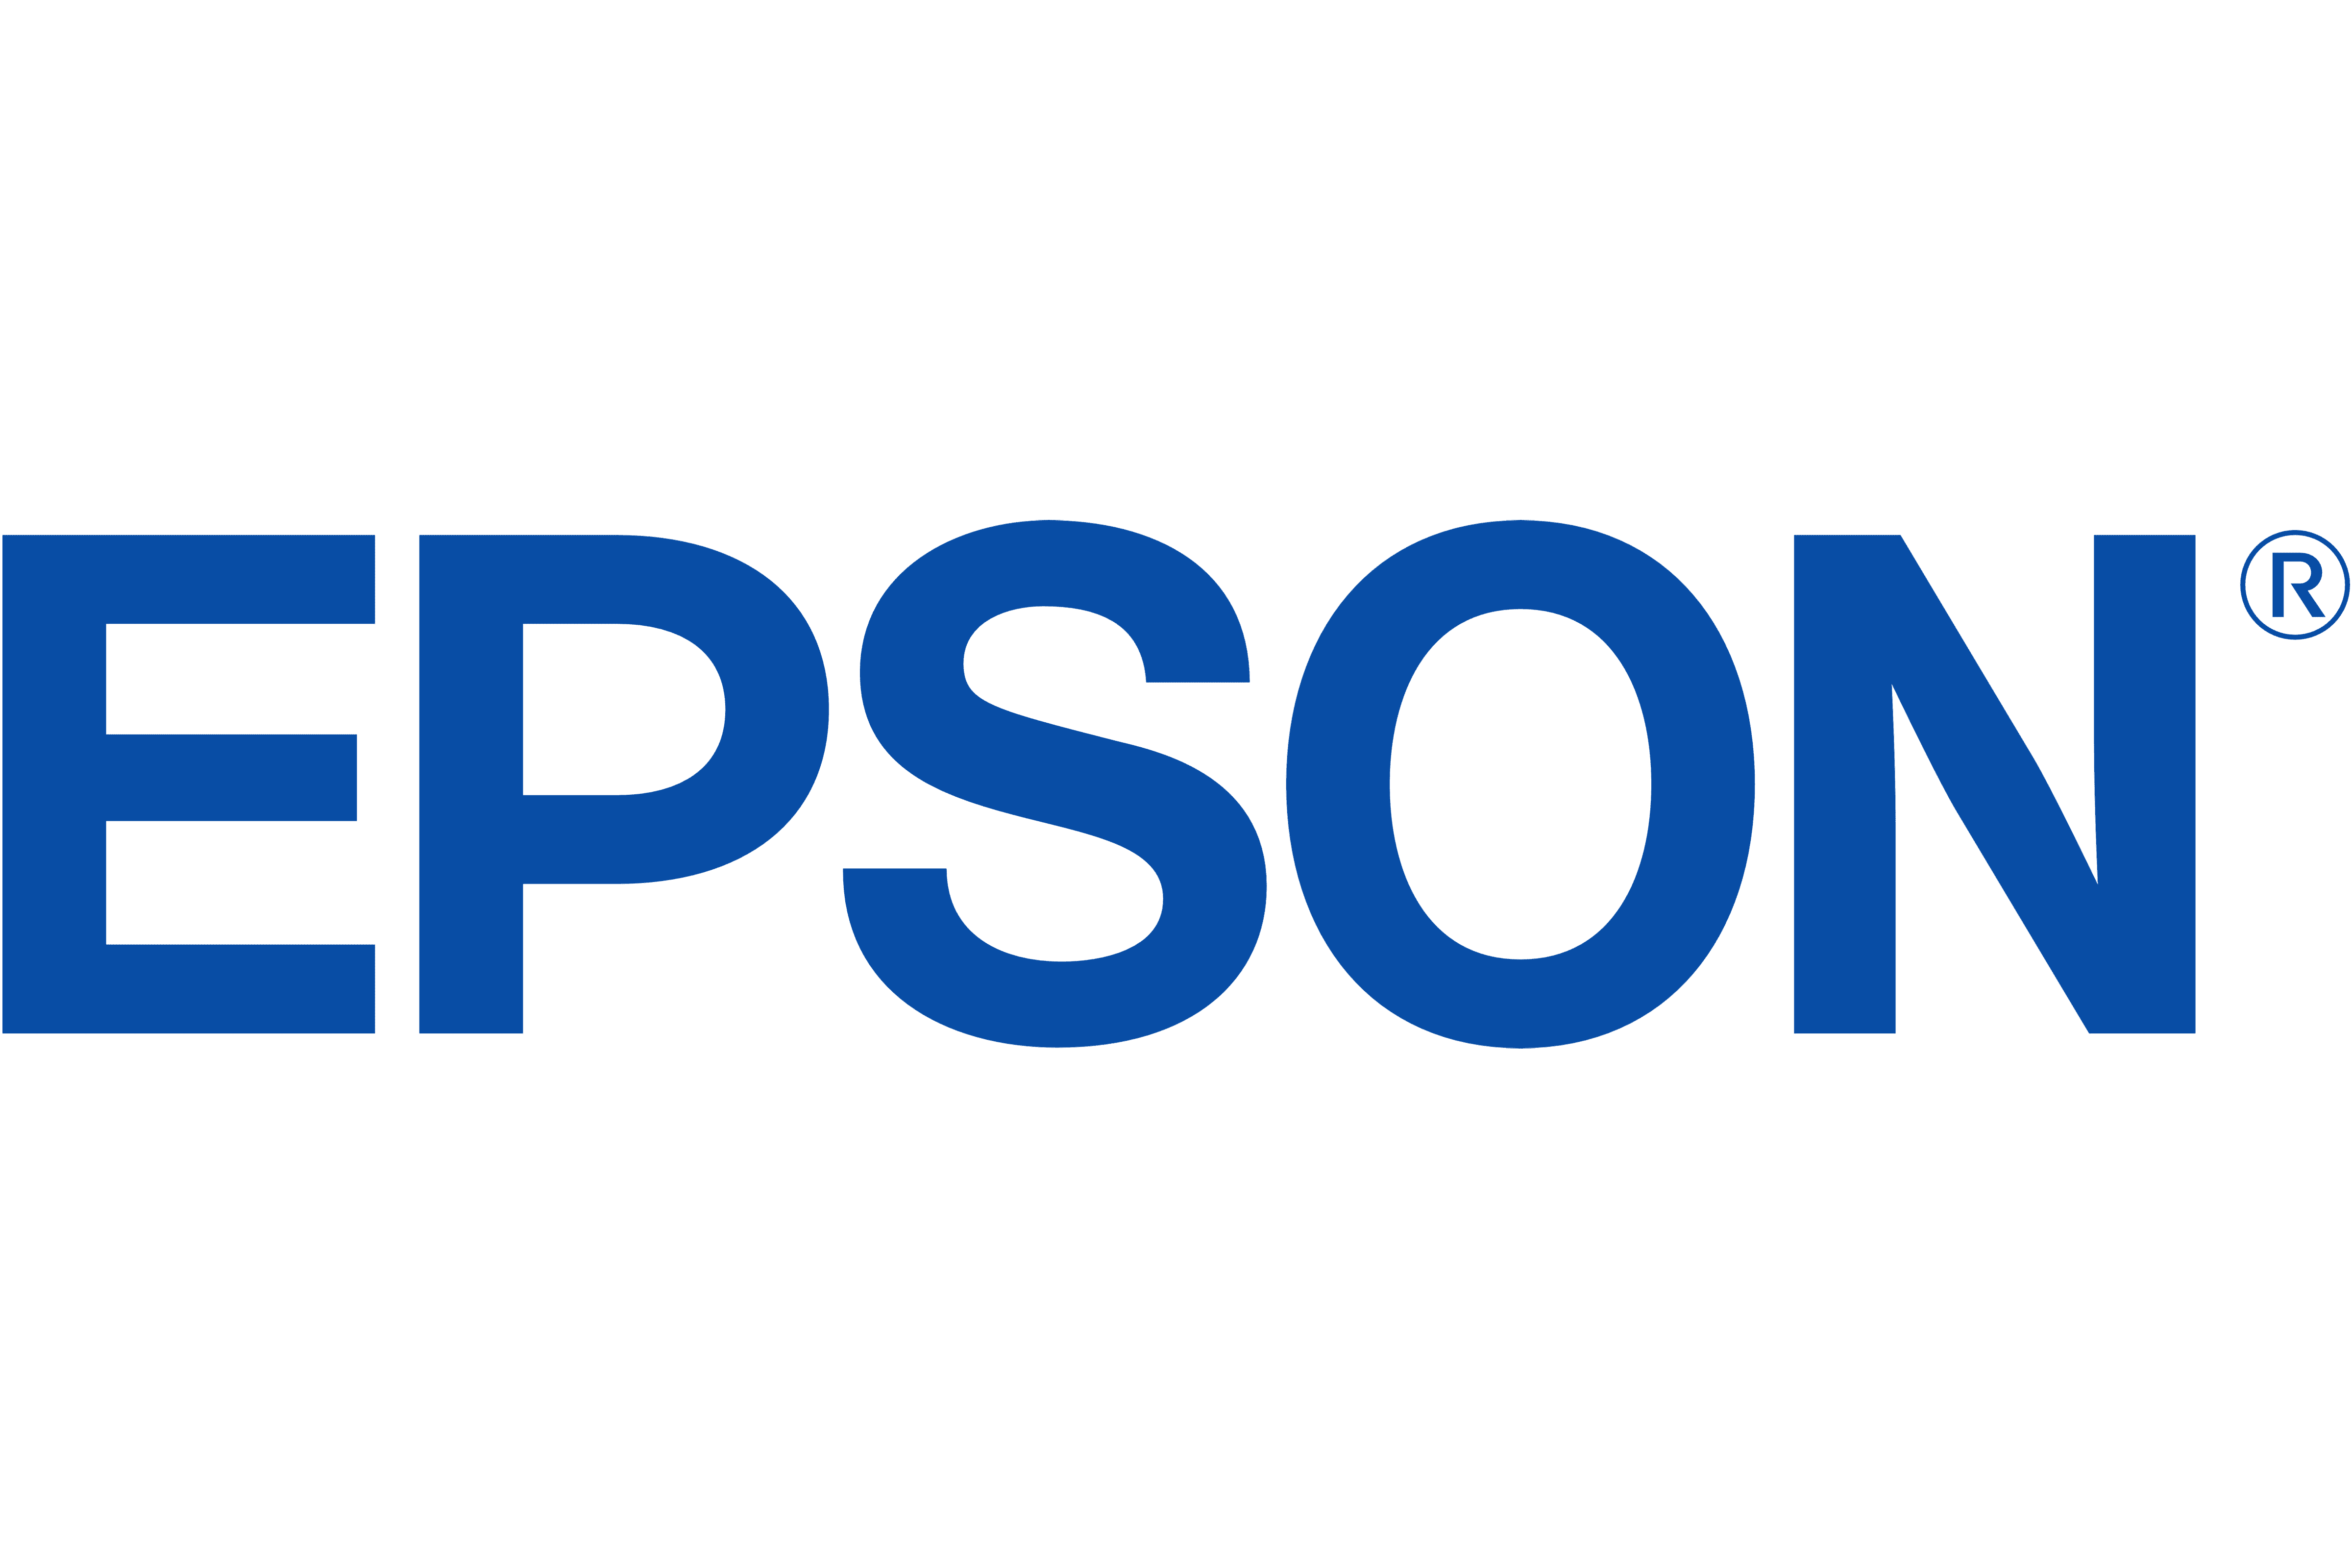 Epson Printer Ink Logo